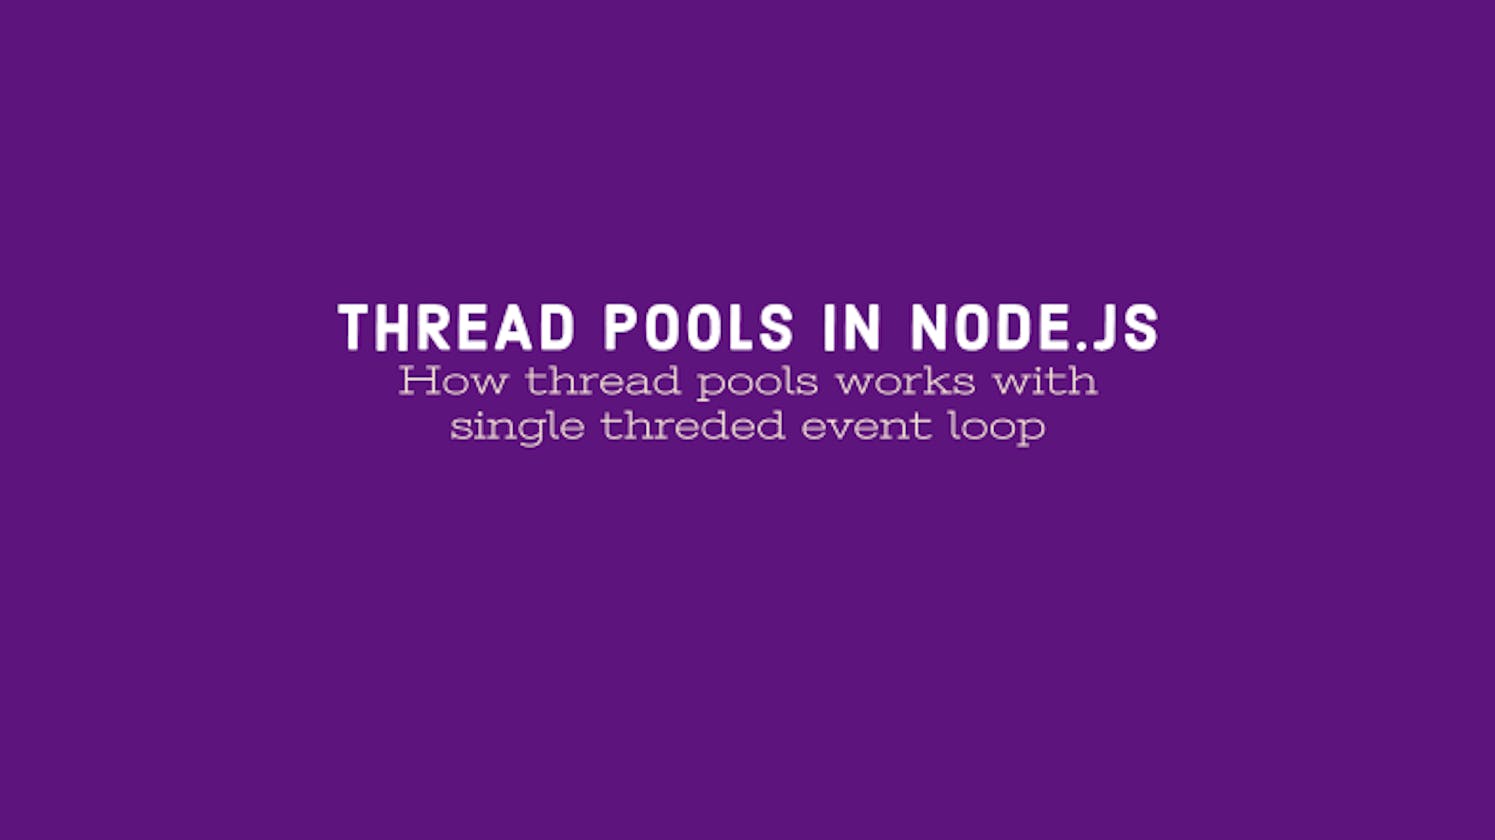 Utilizing Thread pools in Node.js